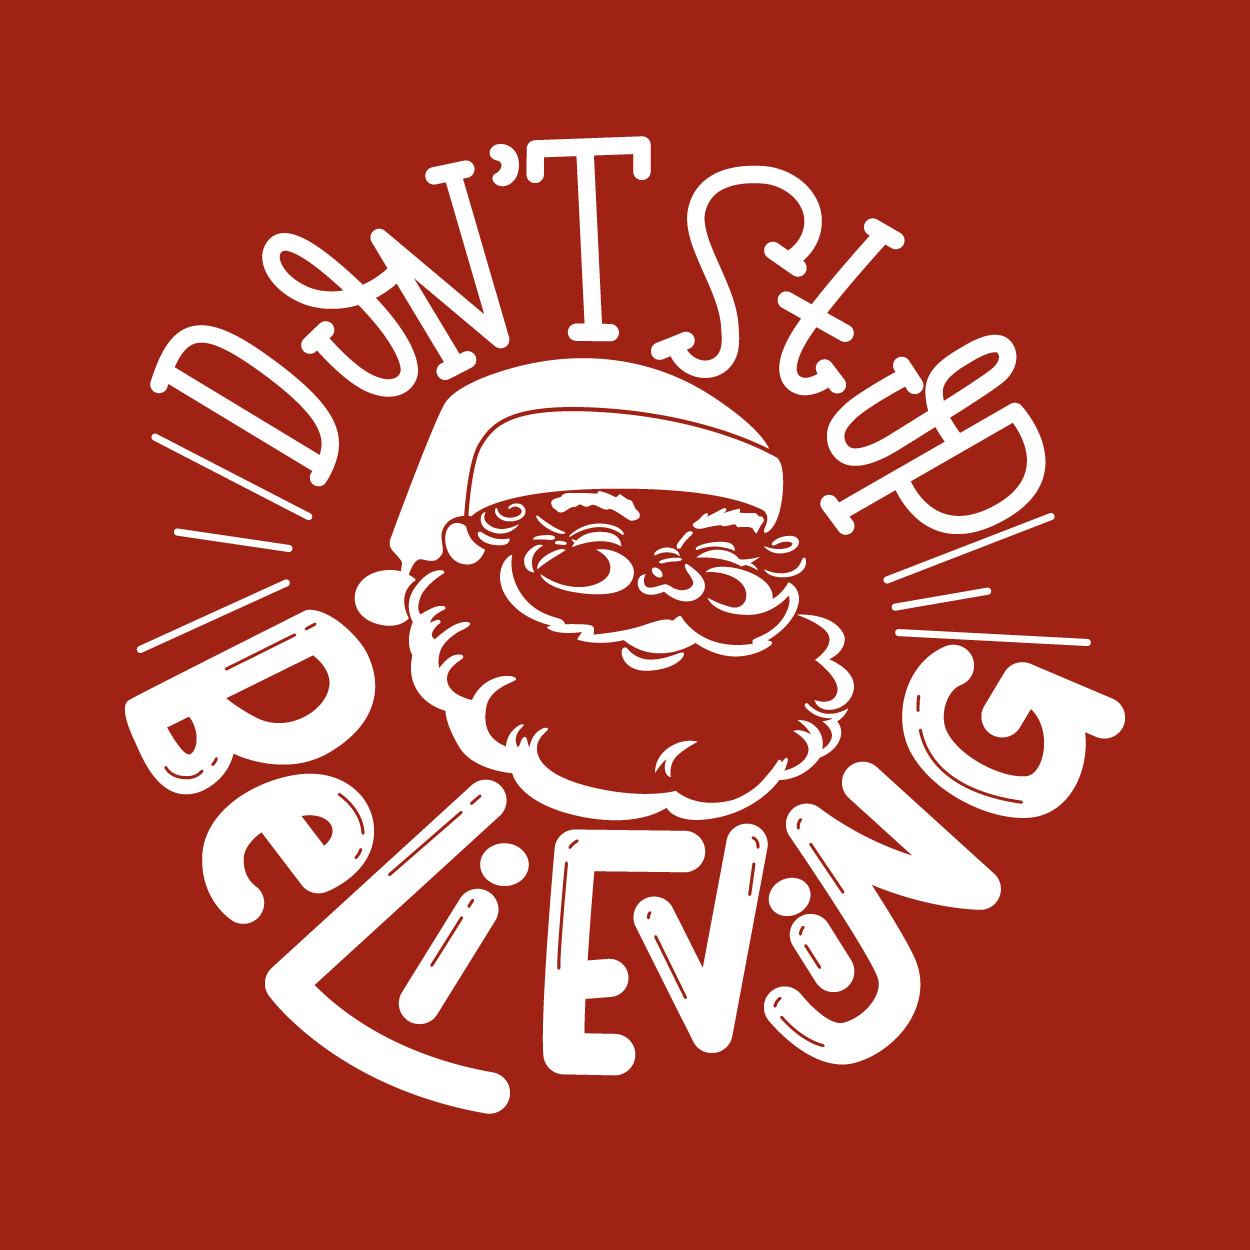 Don't Stup Believing Santa Cuttable Design